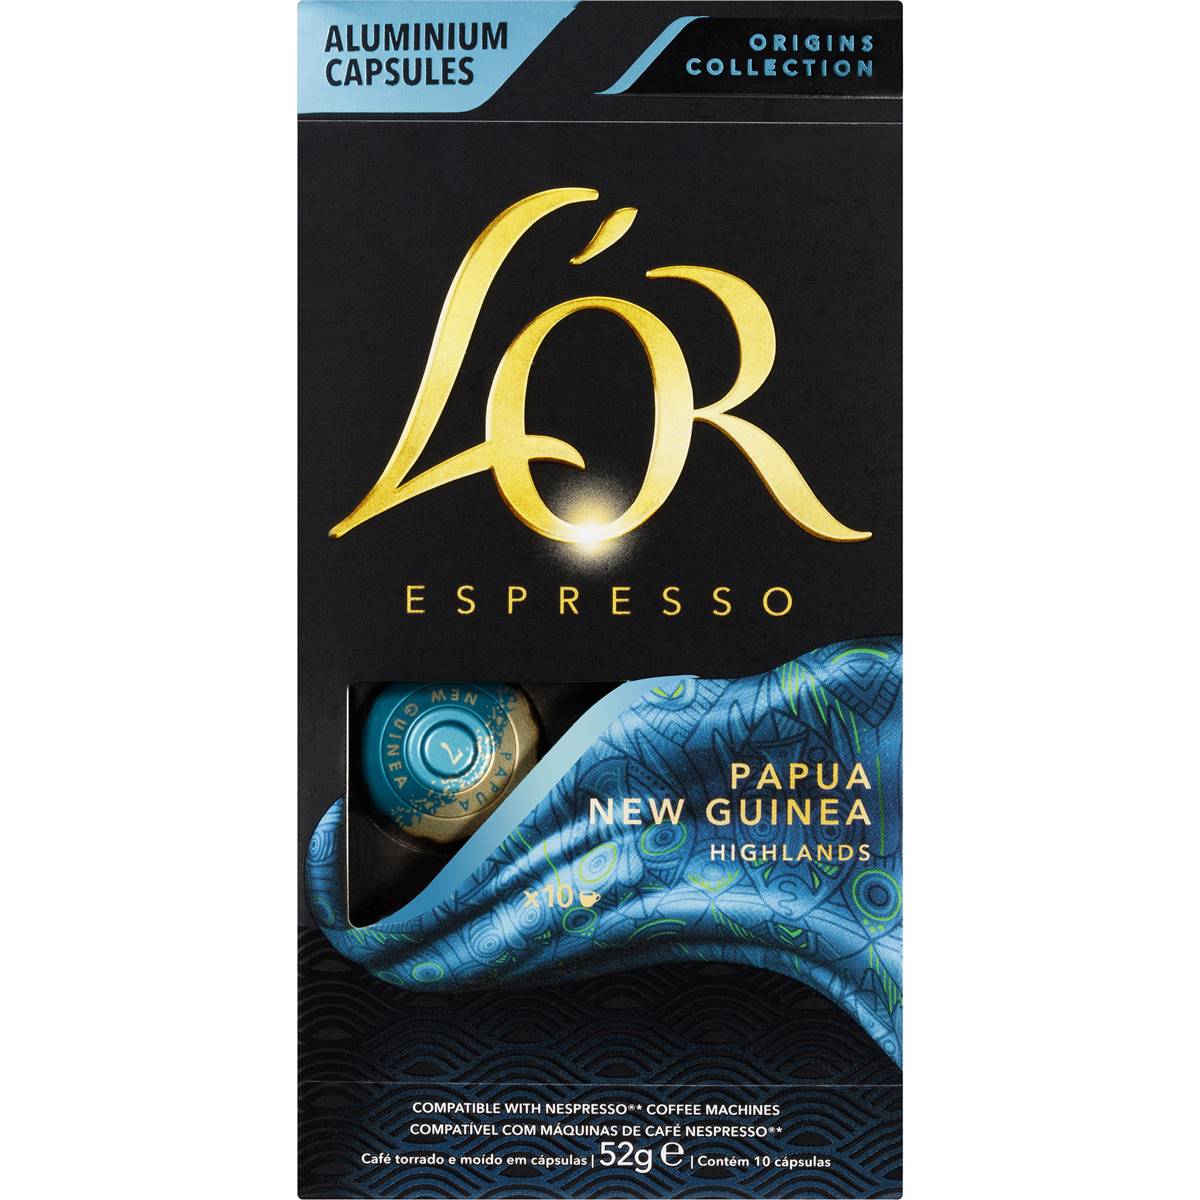 Calories in L'or Espresso Papua New Guinea Intensity 7 Coffee Capsules